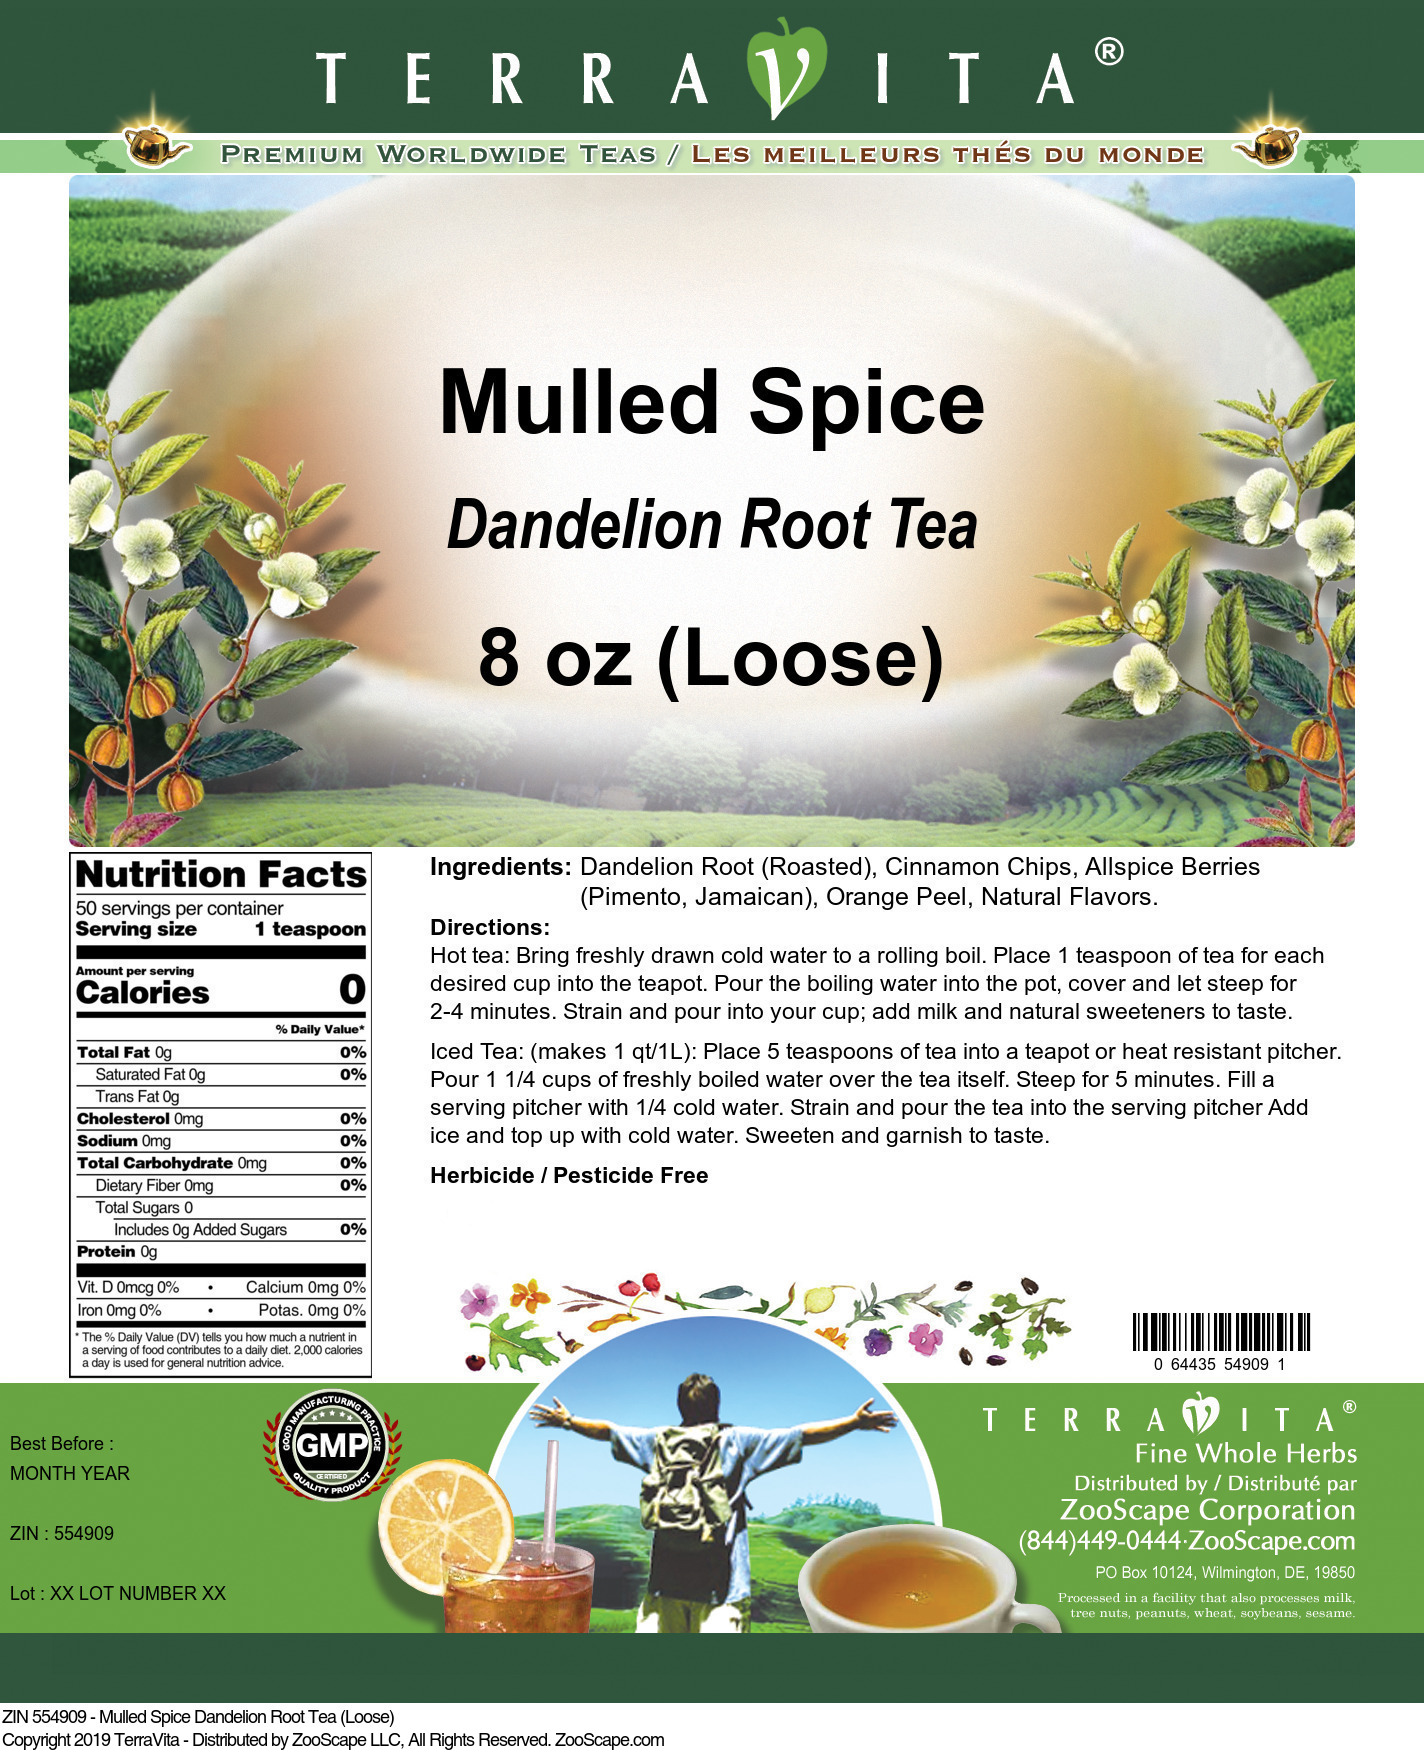 Mulled Spice Dandelion Root Tea (Loose) - Label